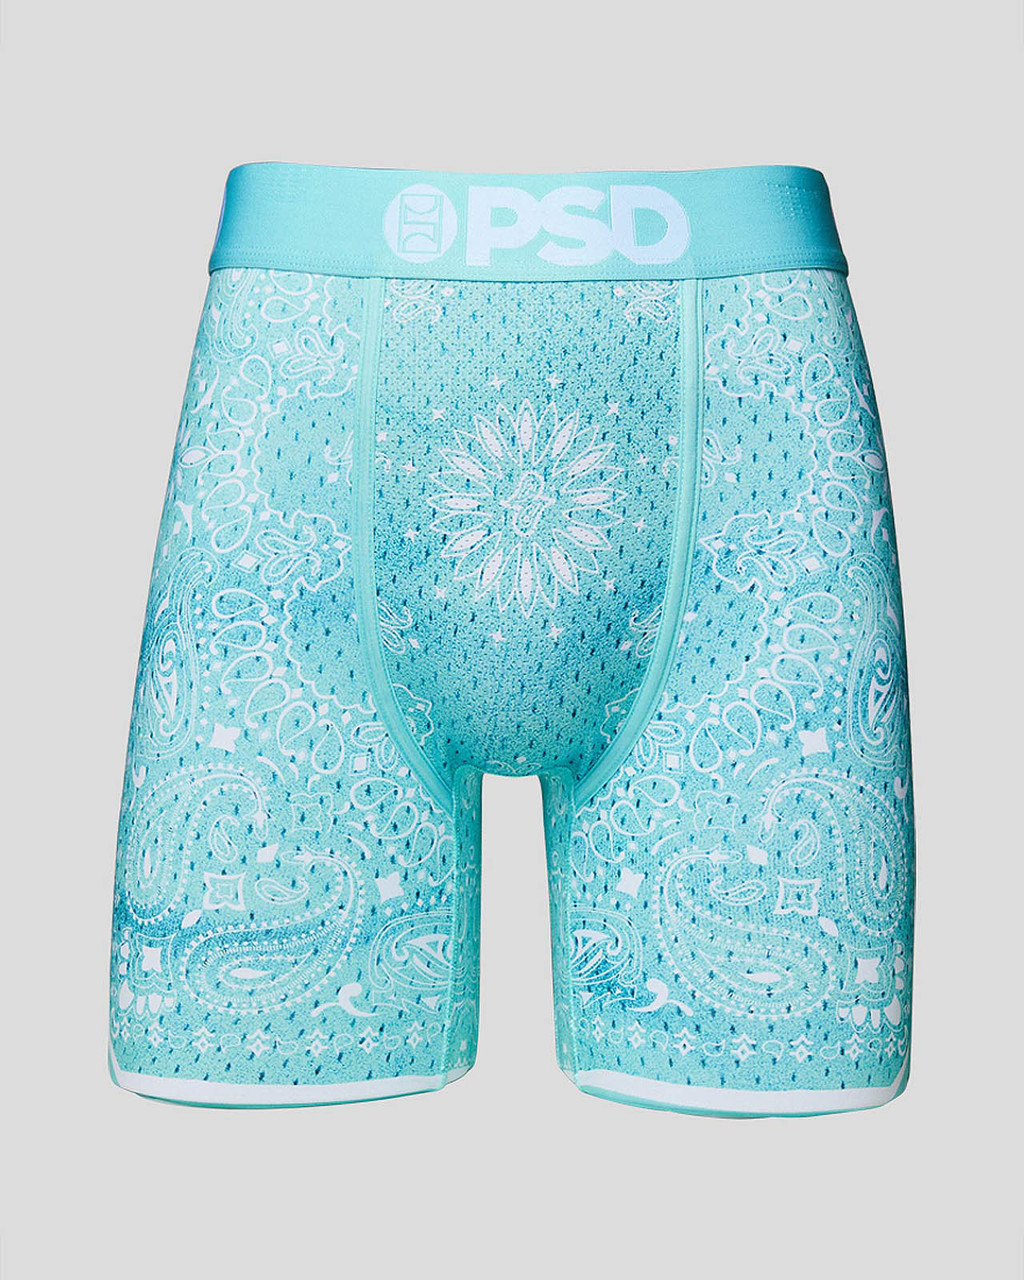 PSD Underwear Boxer Briefs - Hype Red Bandana